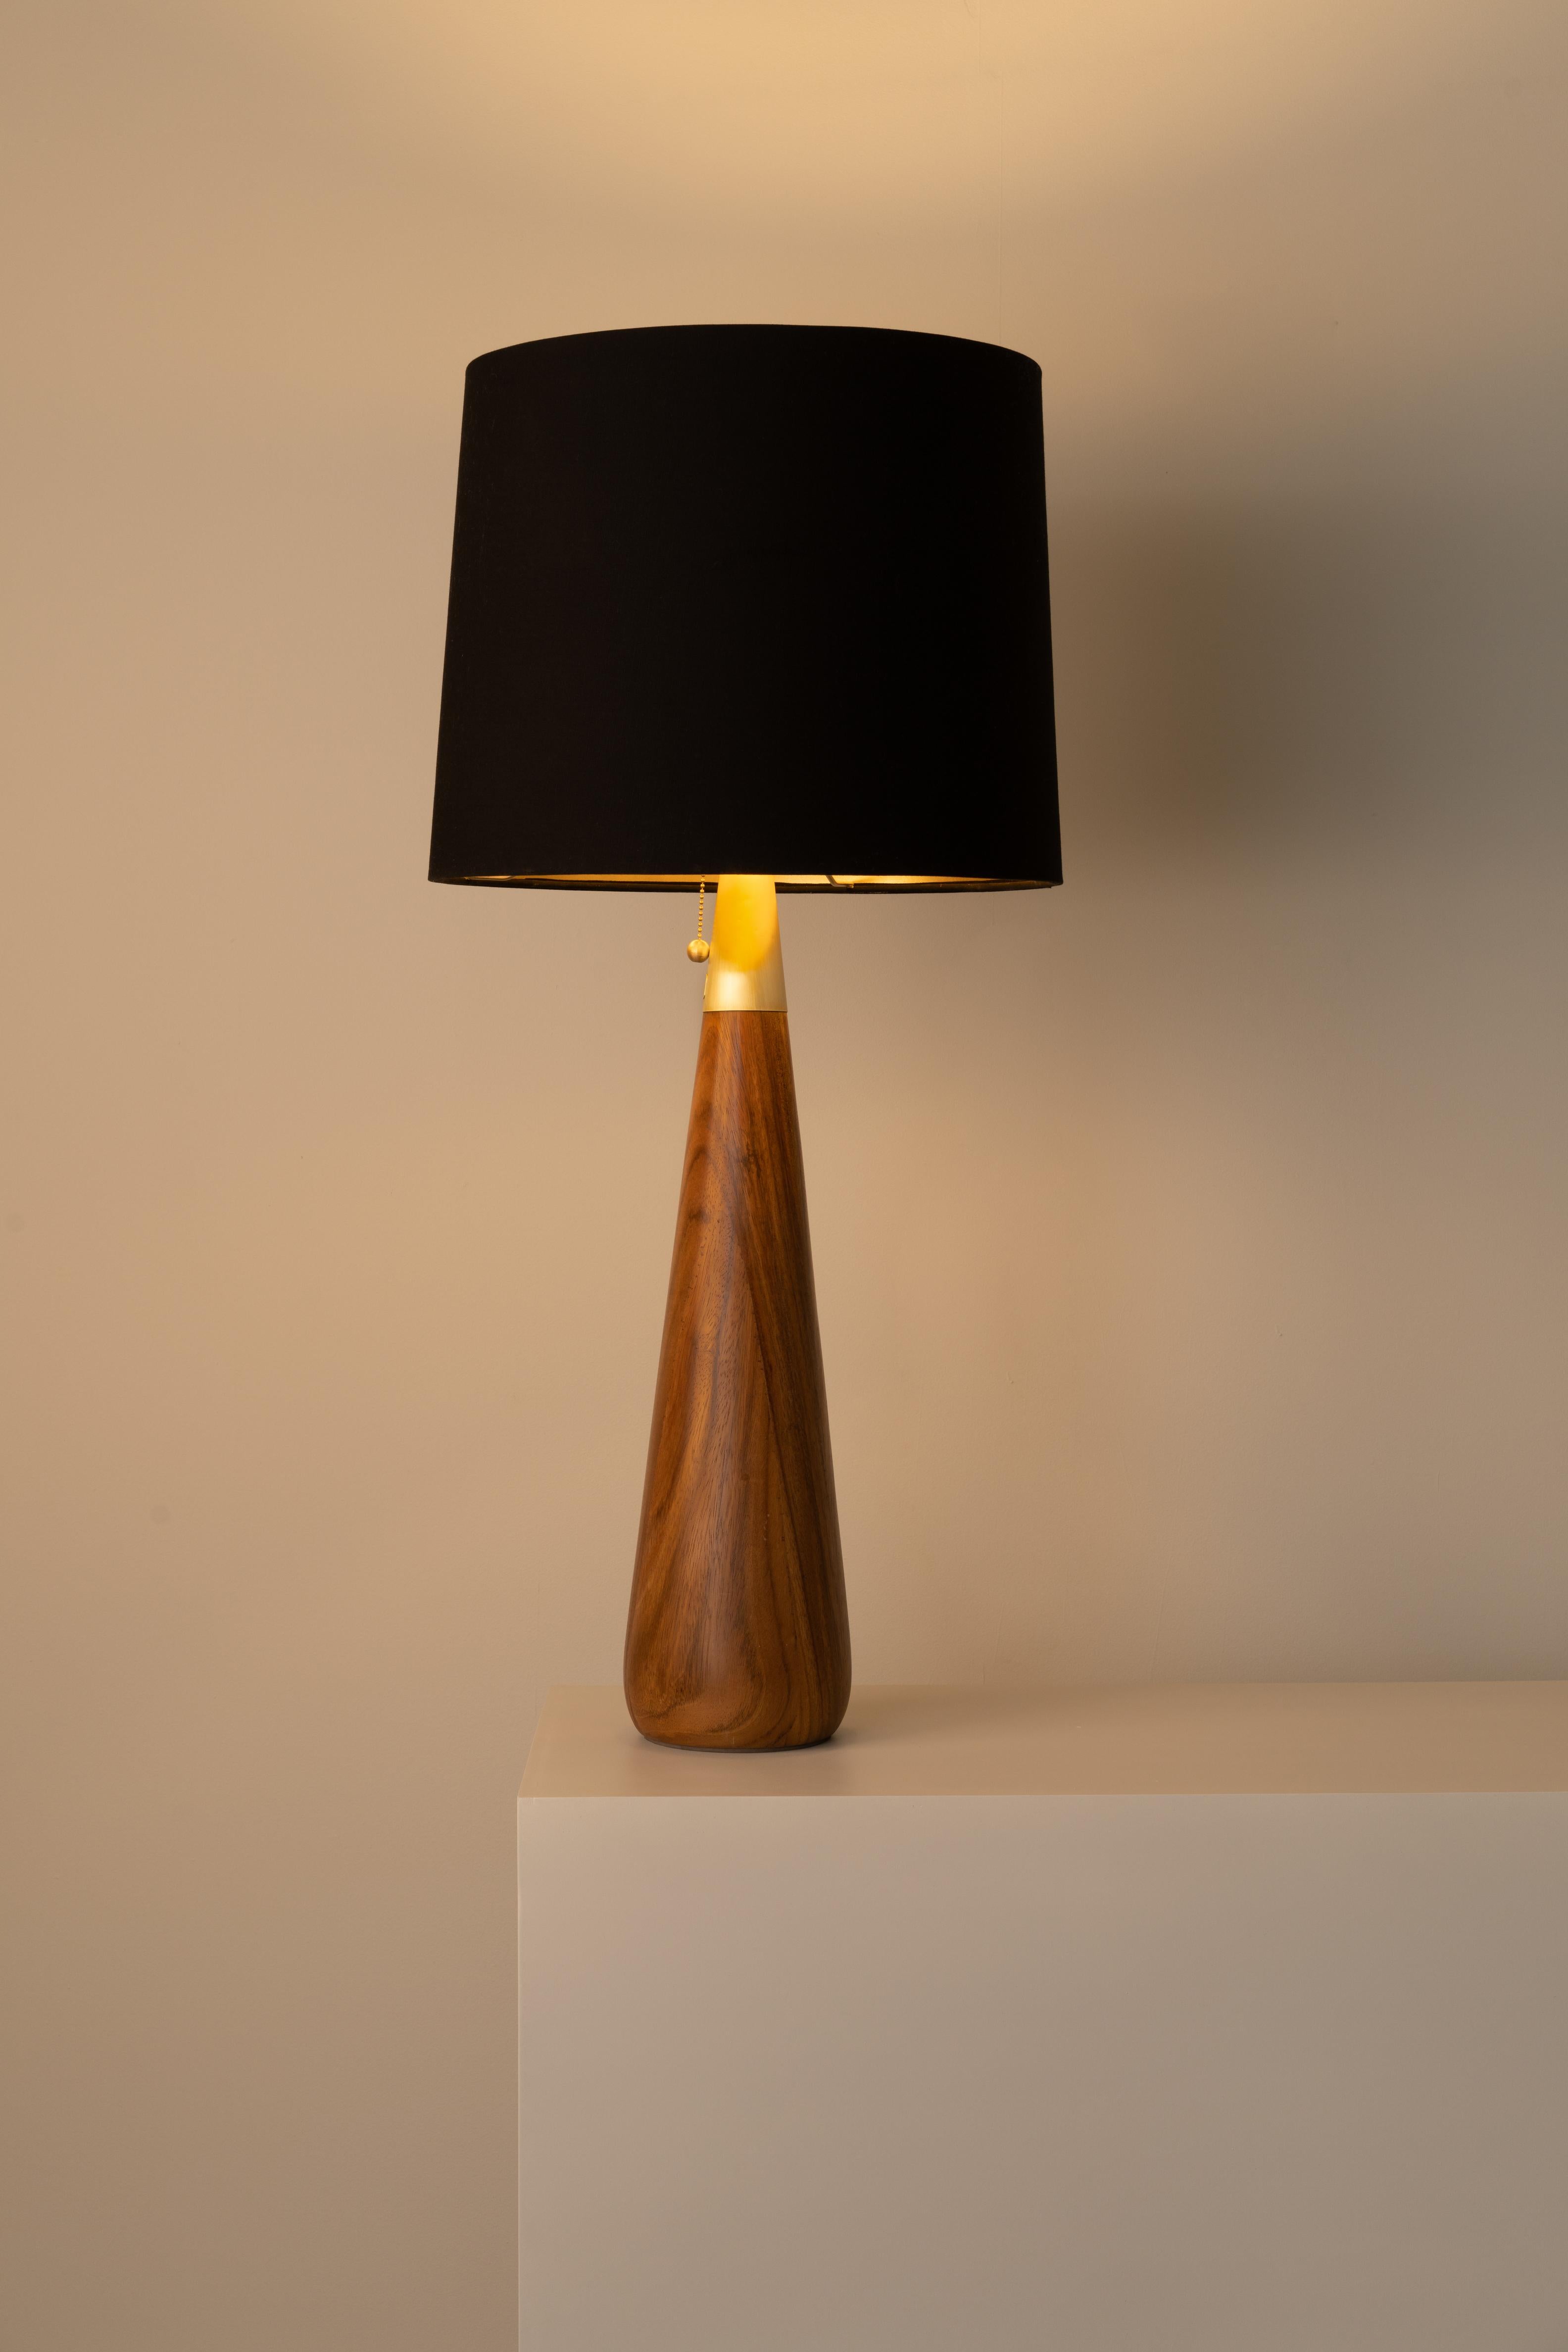 Forged Organic Modern Table Lamp Natural Parota Wood Fiberglass Shade For Sale